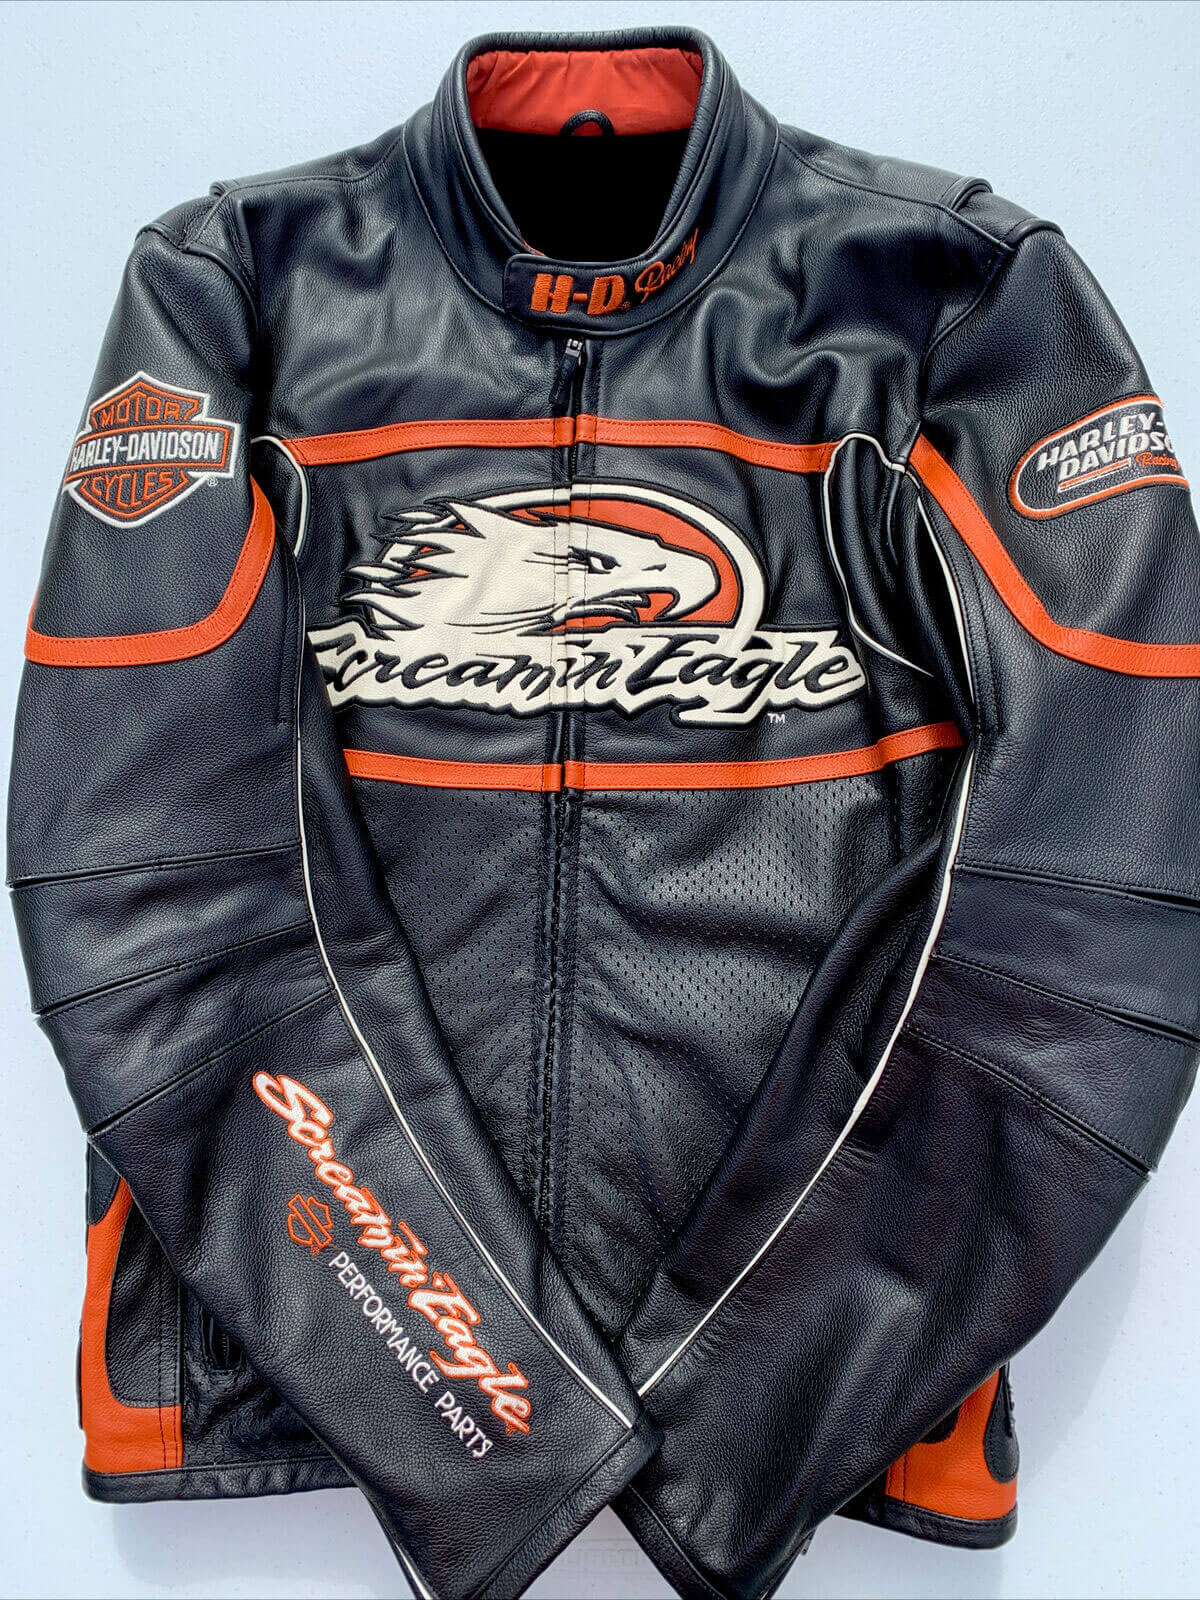 Harley Davidson Raceway Screamin Eagle Leather Jacket   Maker of